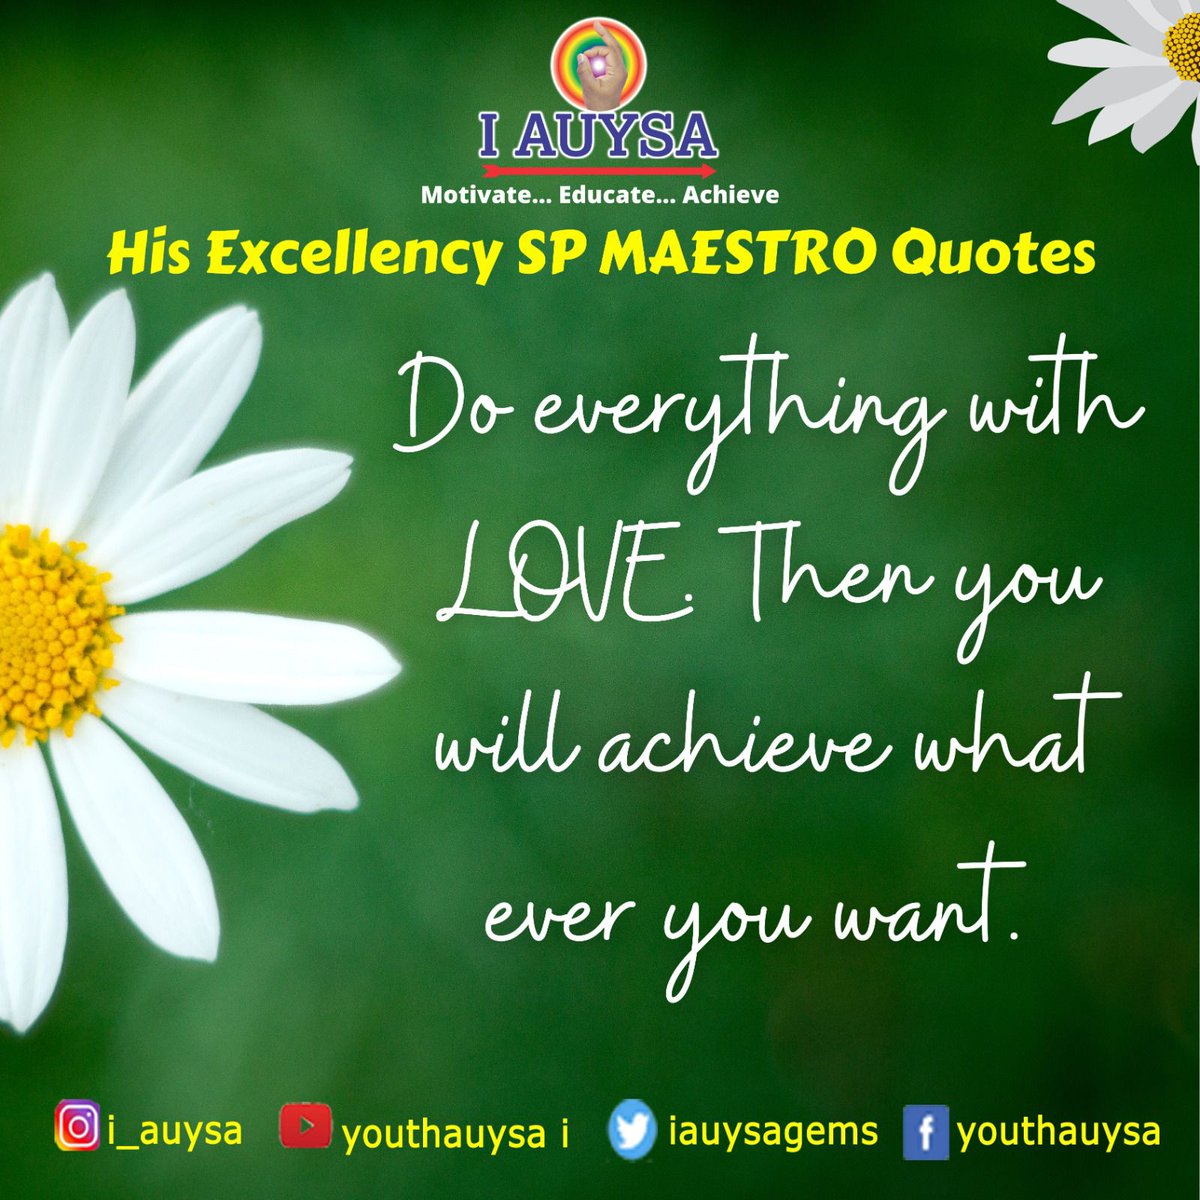 His Excellency SP Maestro Quotes #iauysa #iauysagems #belovedspmaestro #spmaestro #motivationalquotes #success #youth #love #life